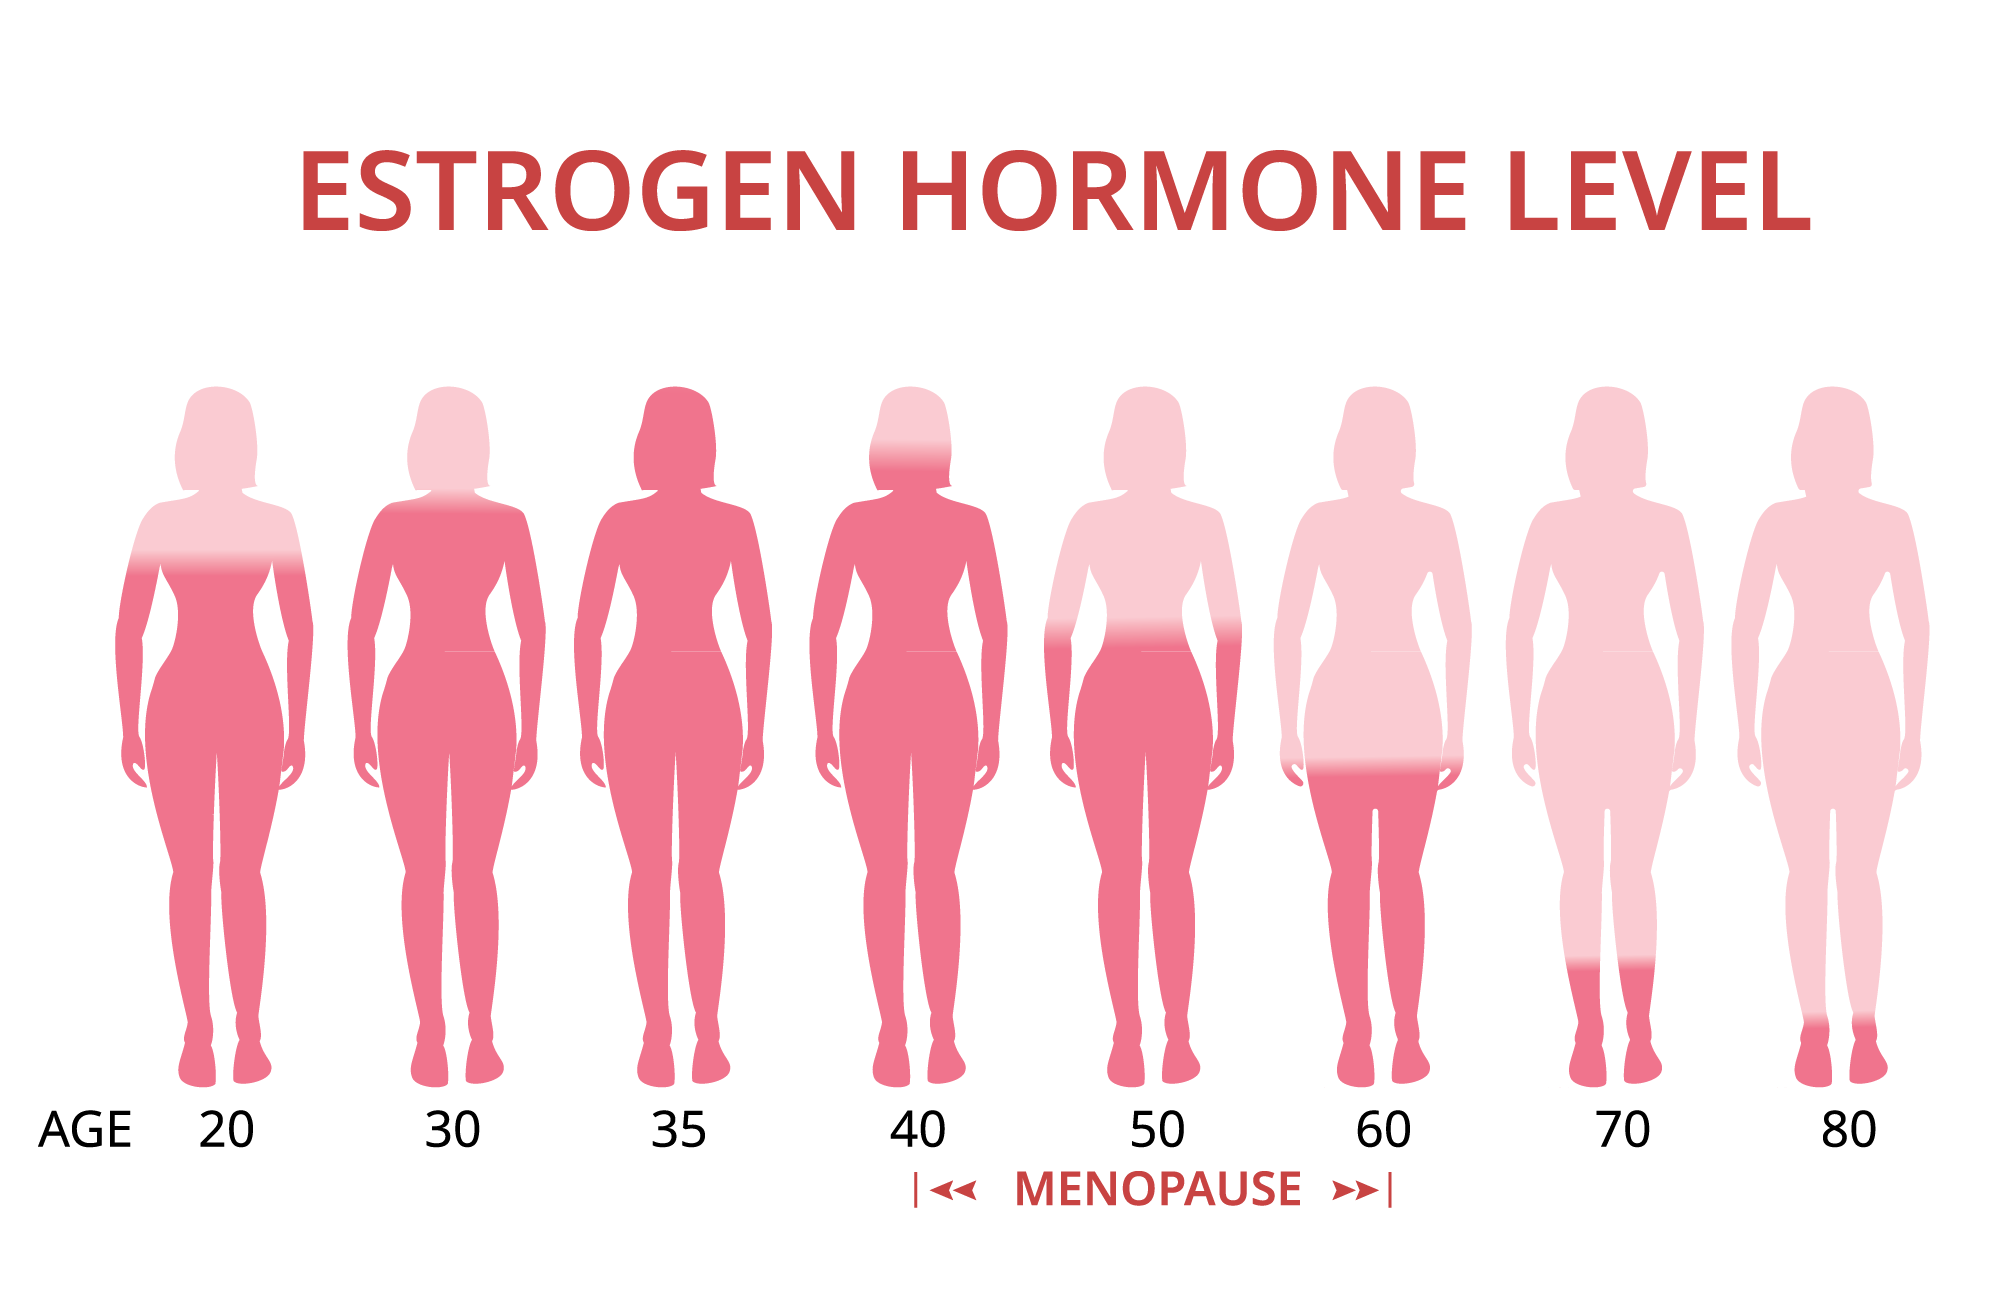 Estrogen changes throughout life